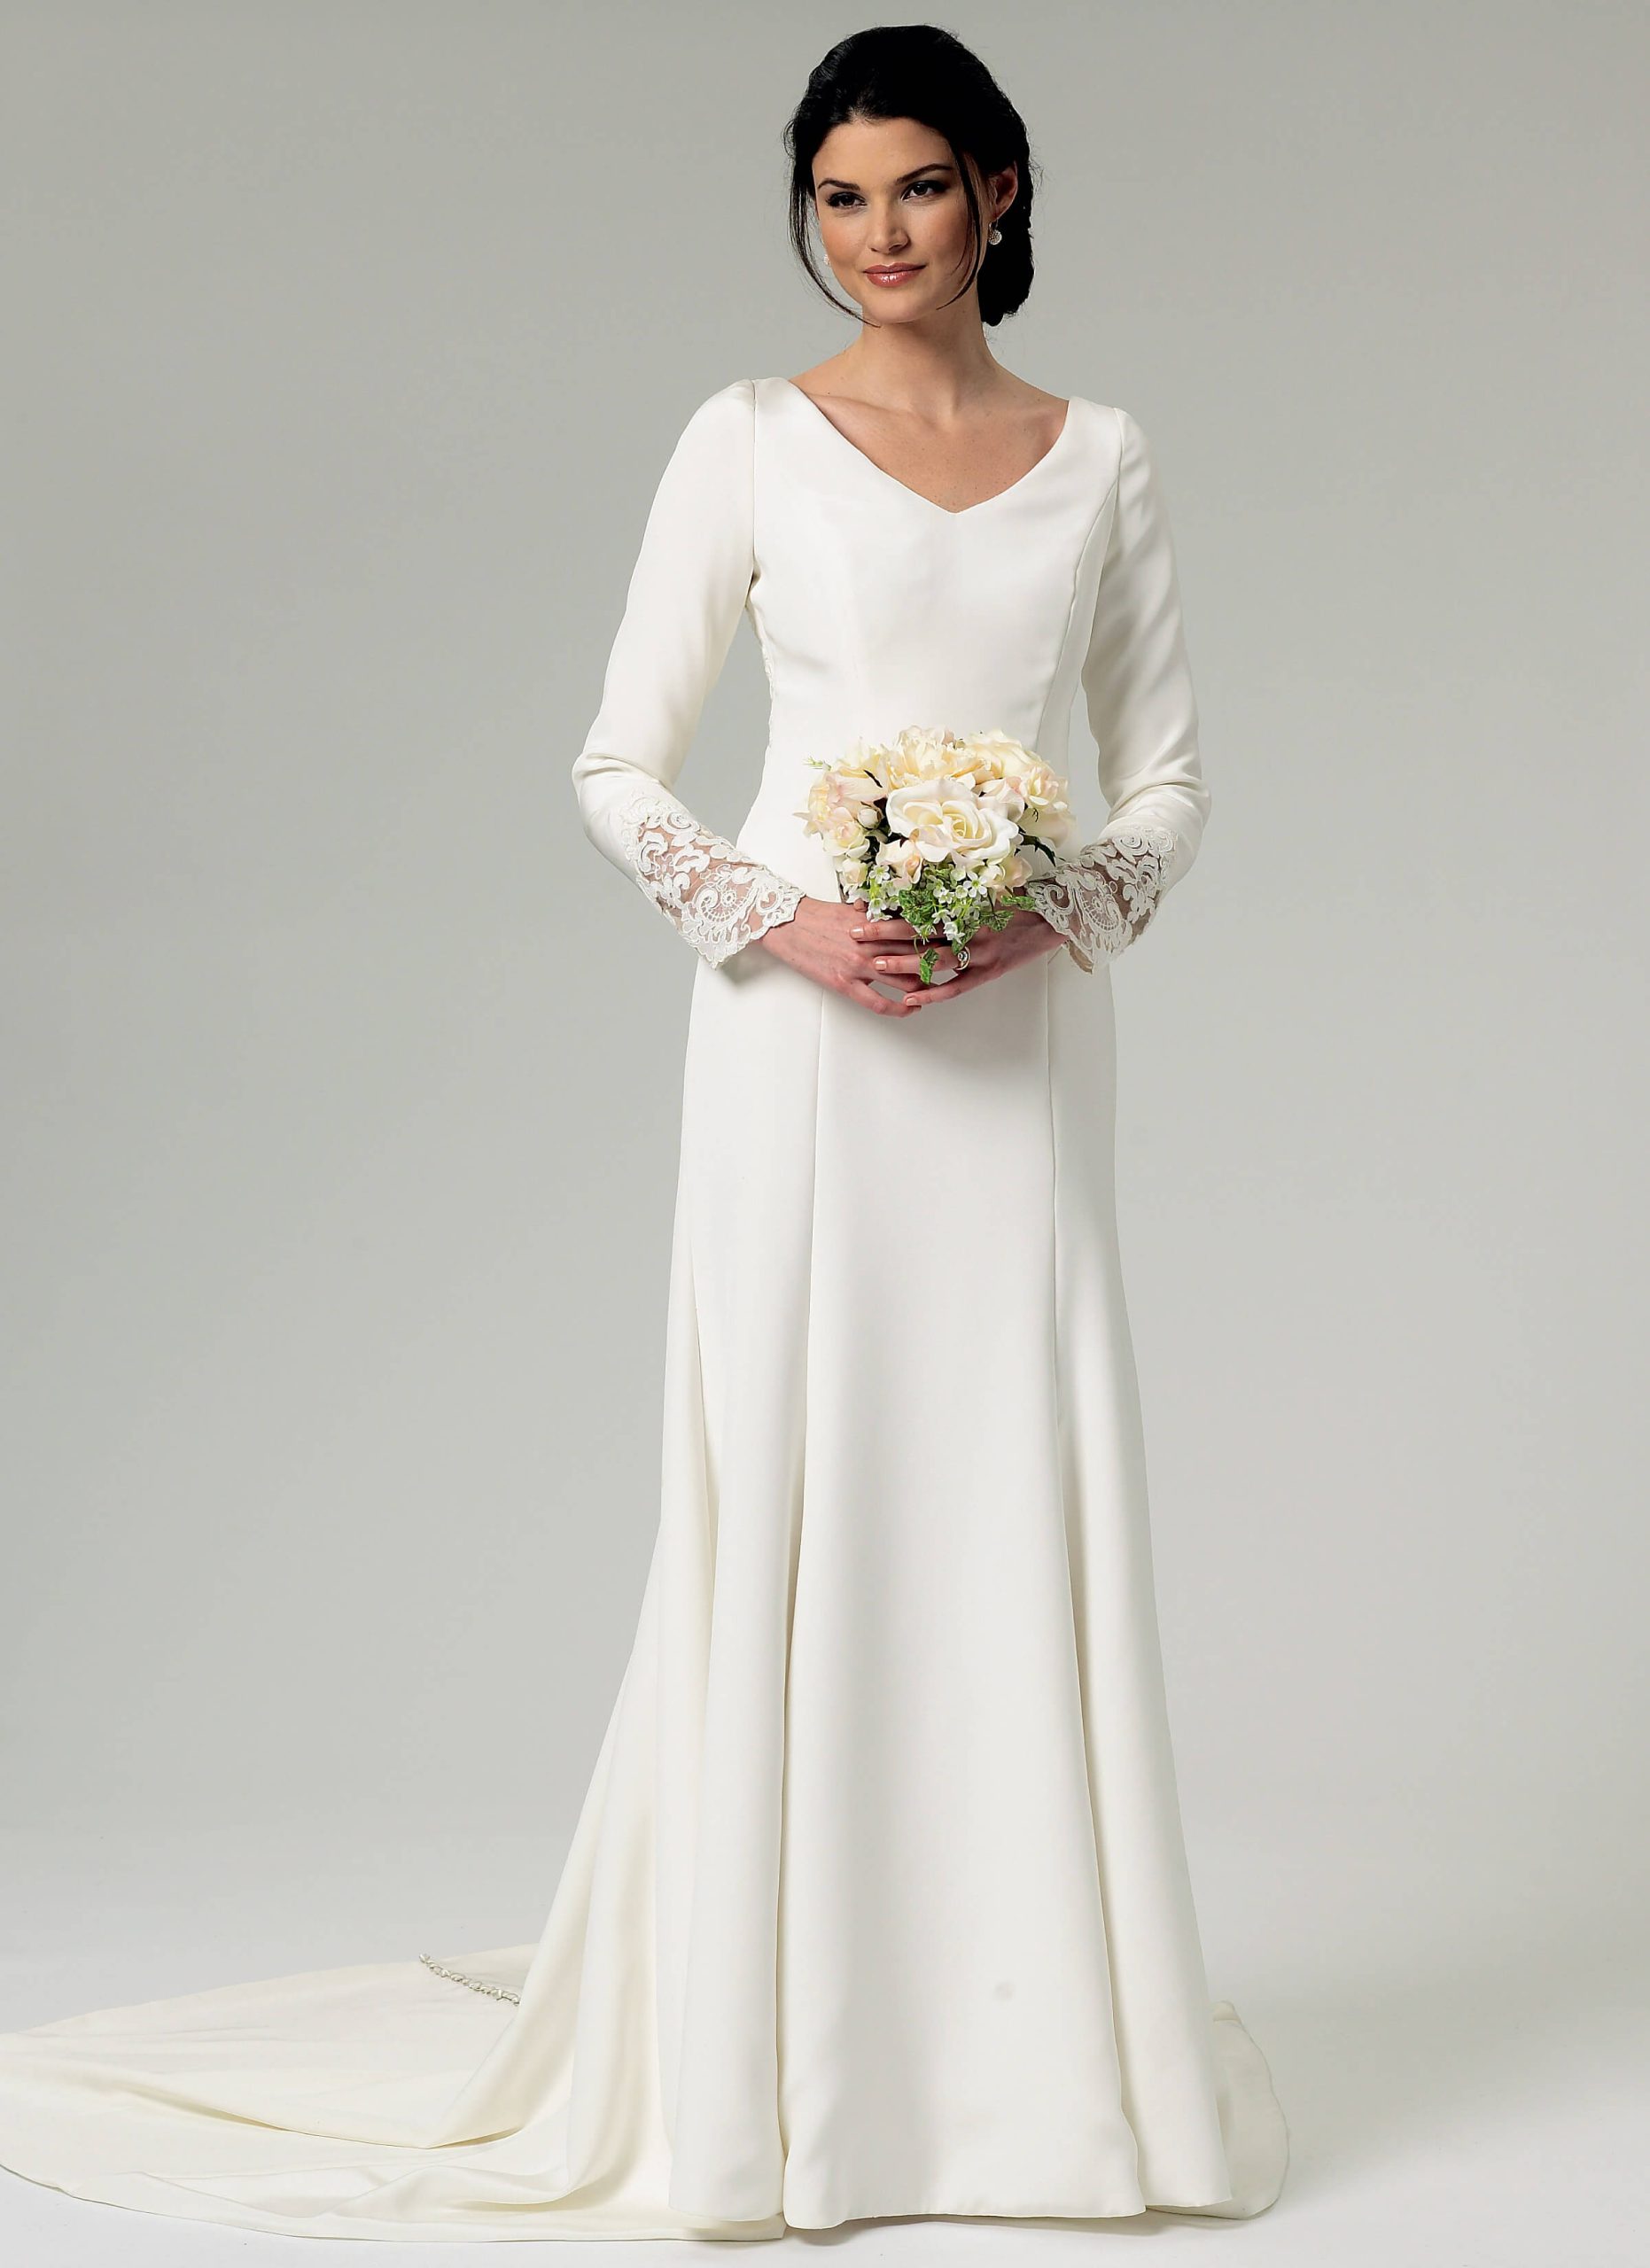 Butterick Sewing Pattern B5779 Misses' Bridal Dress